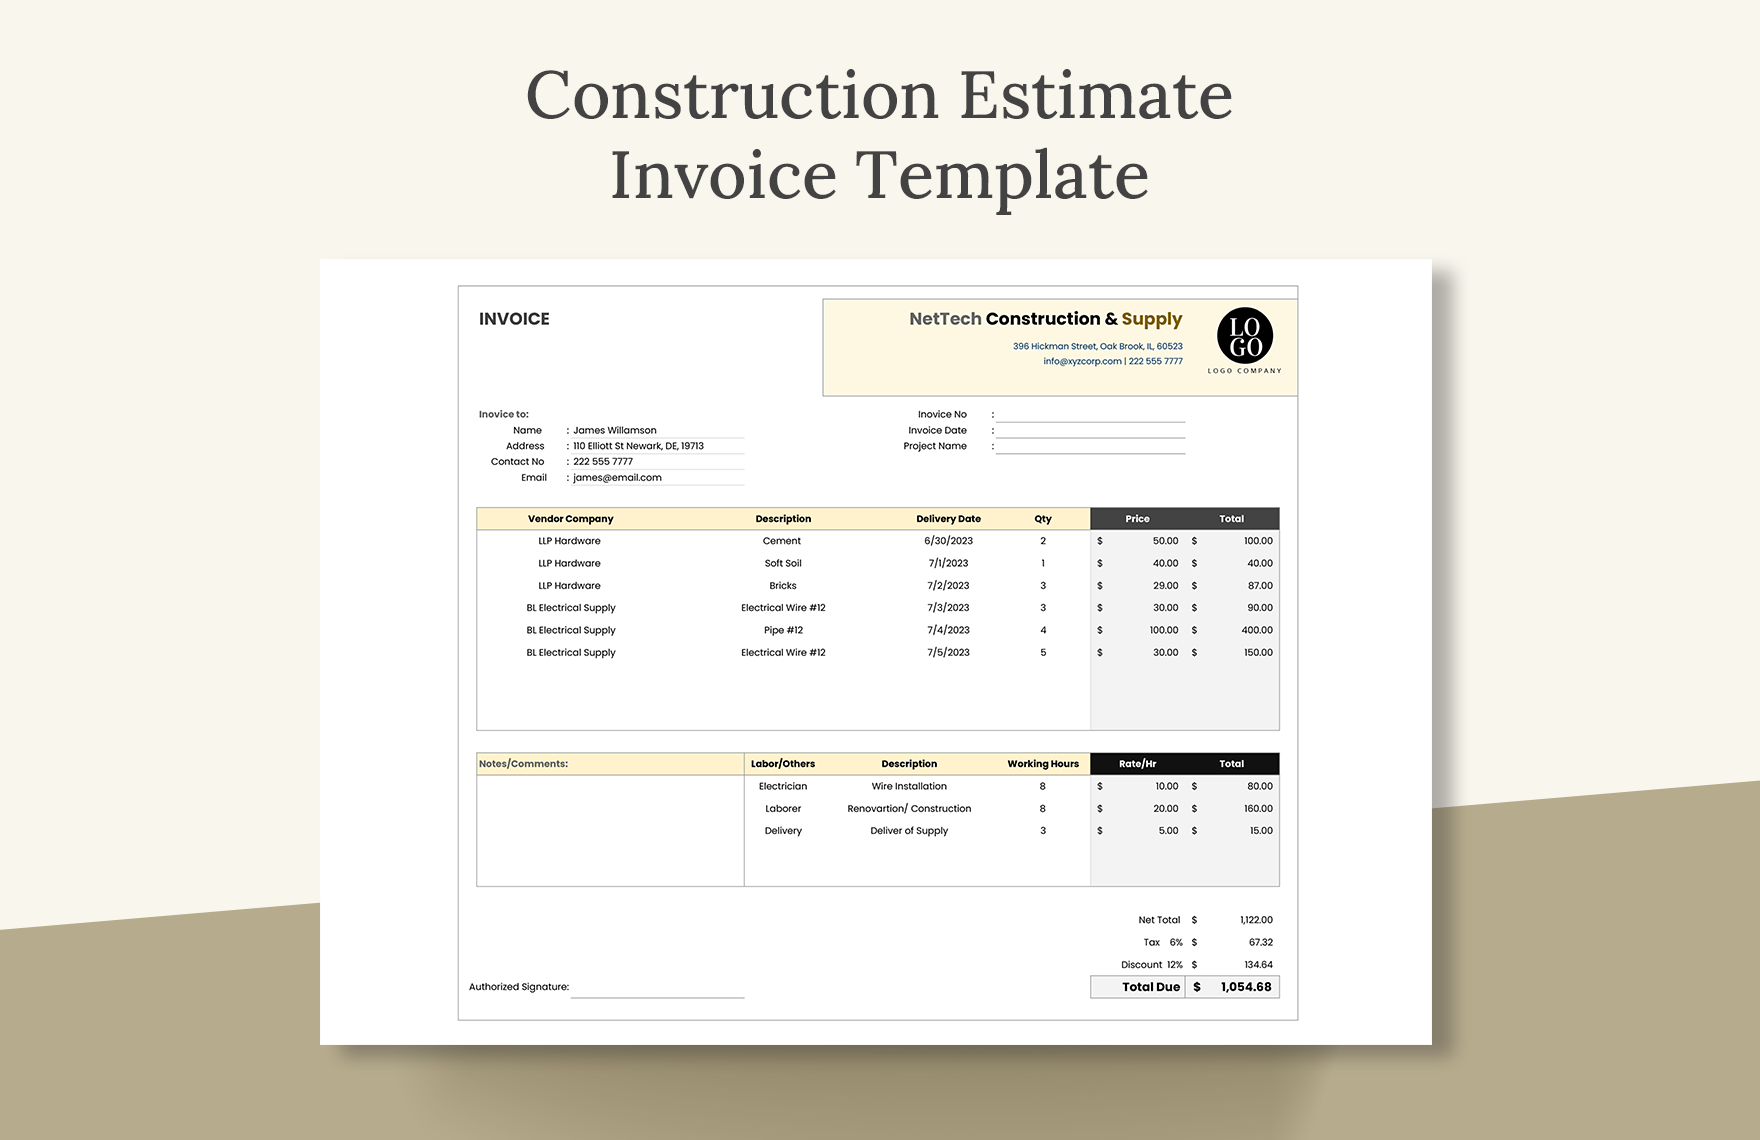 Construction Estimate Invoice Template